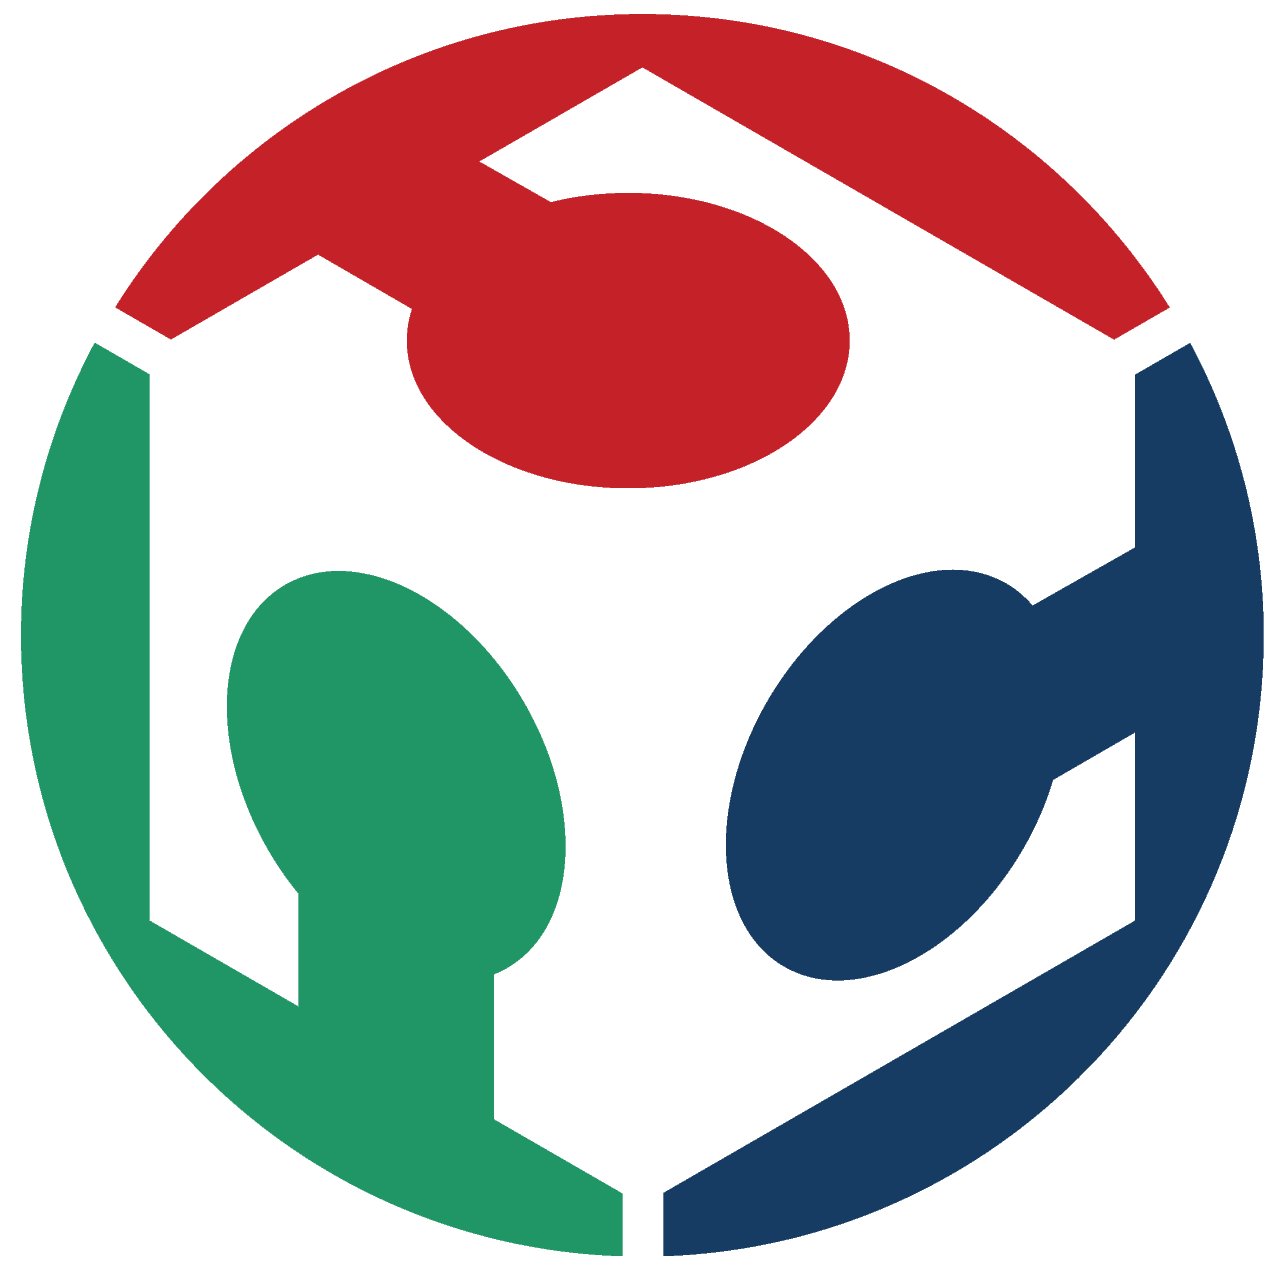 Original image of FabAcademy logo with background